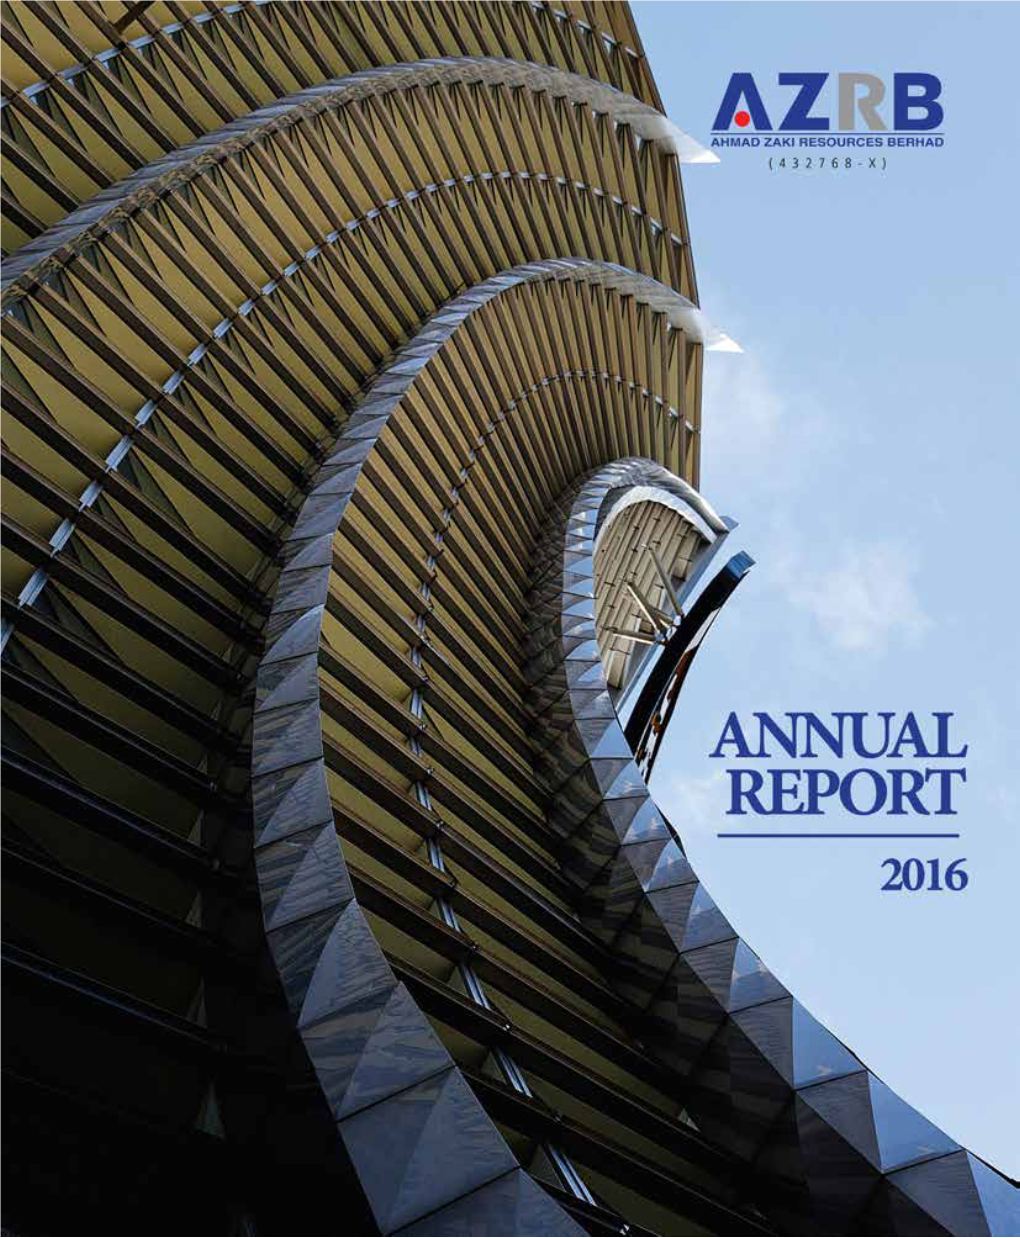 Ahmad Zaki Resources Berhad ANNUAL REPORT 2016